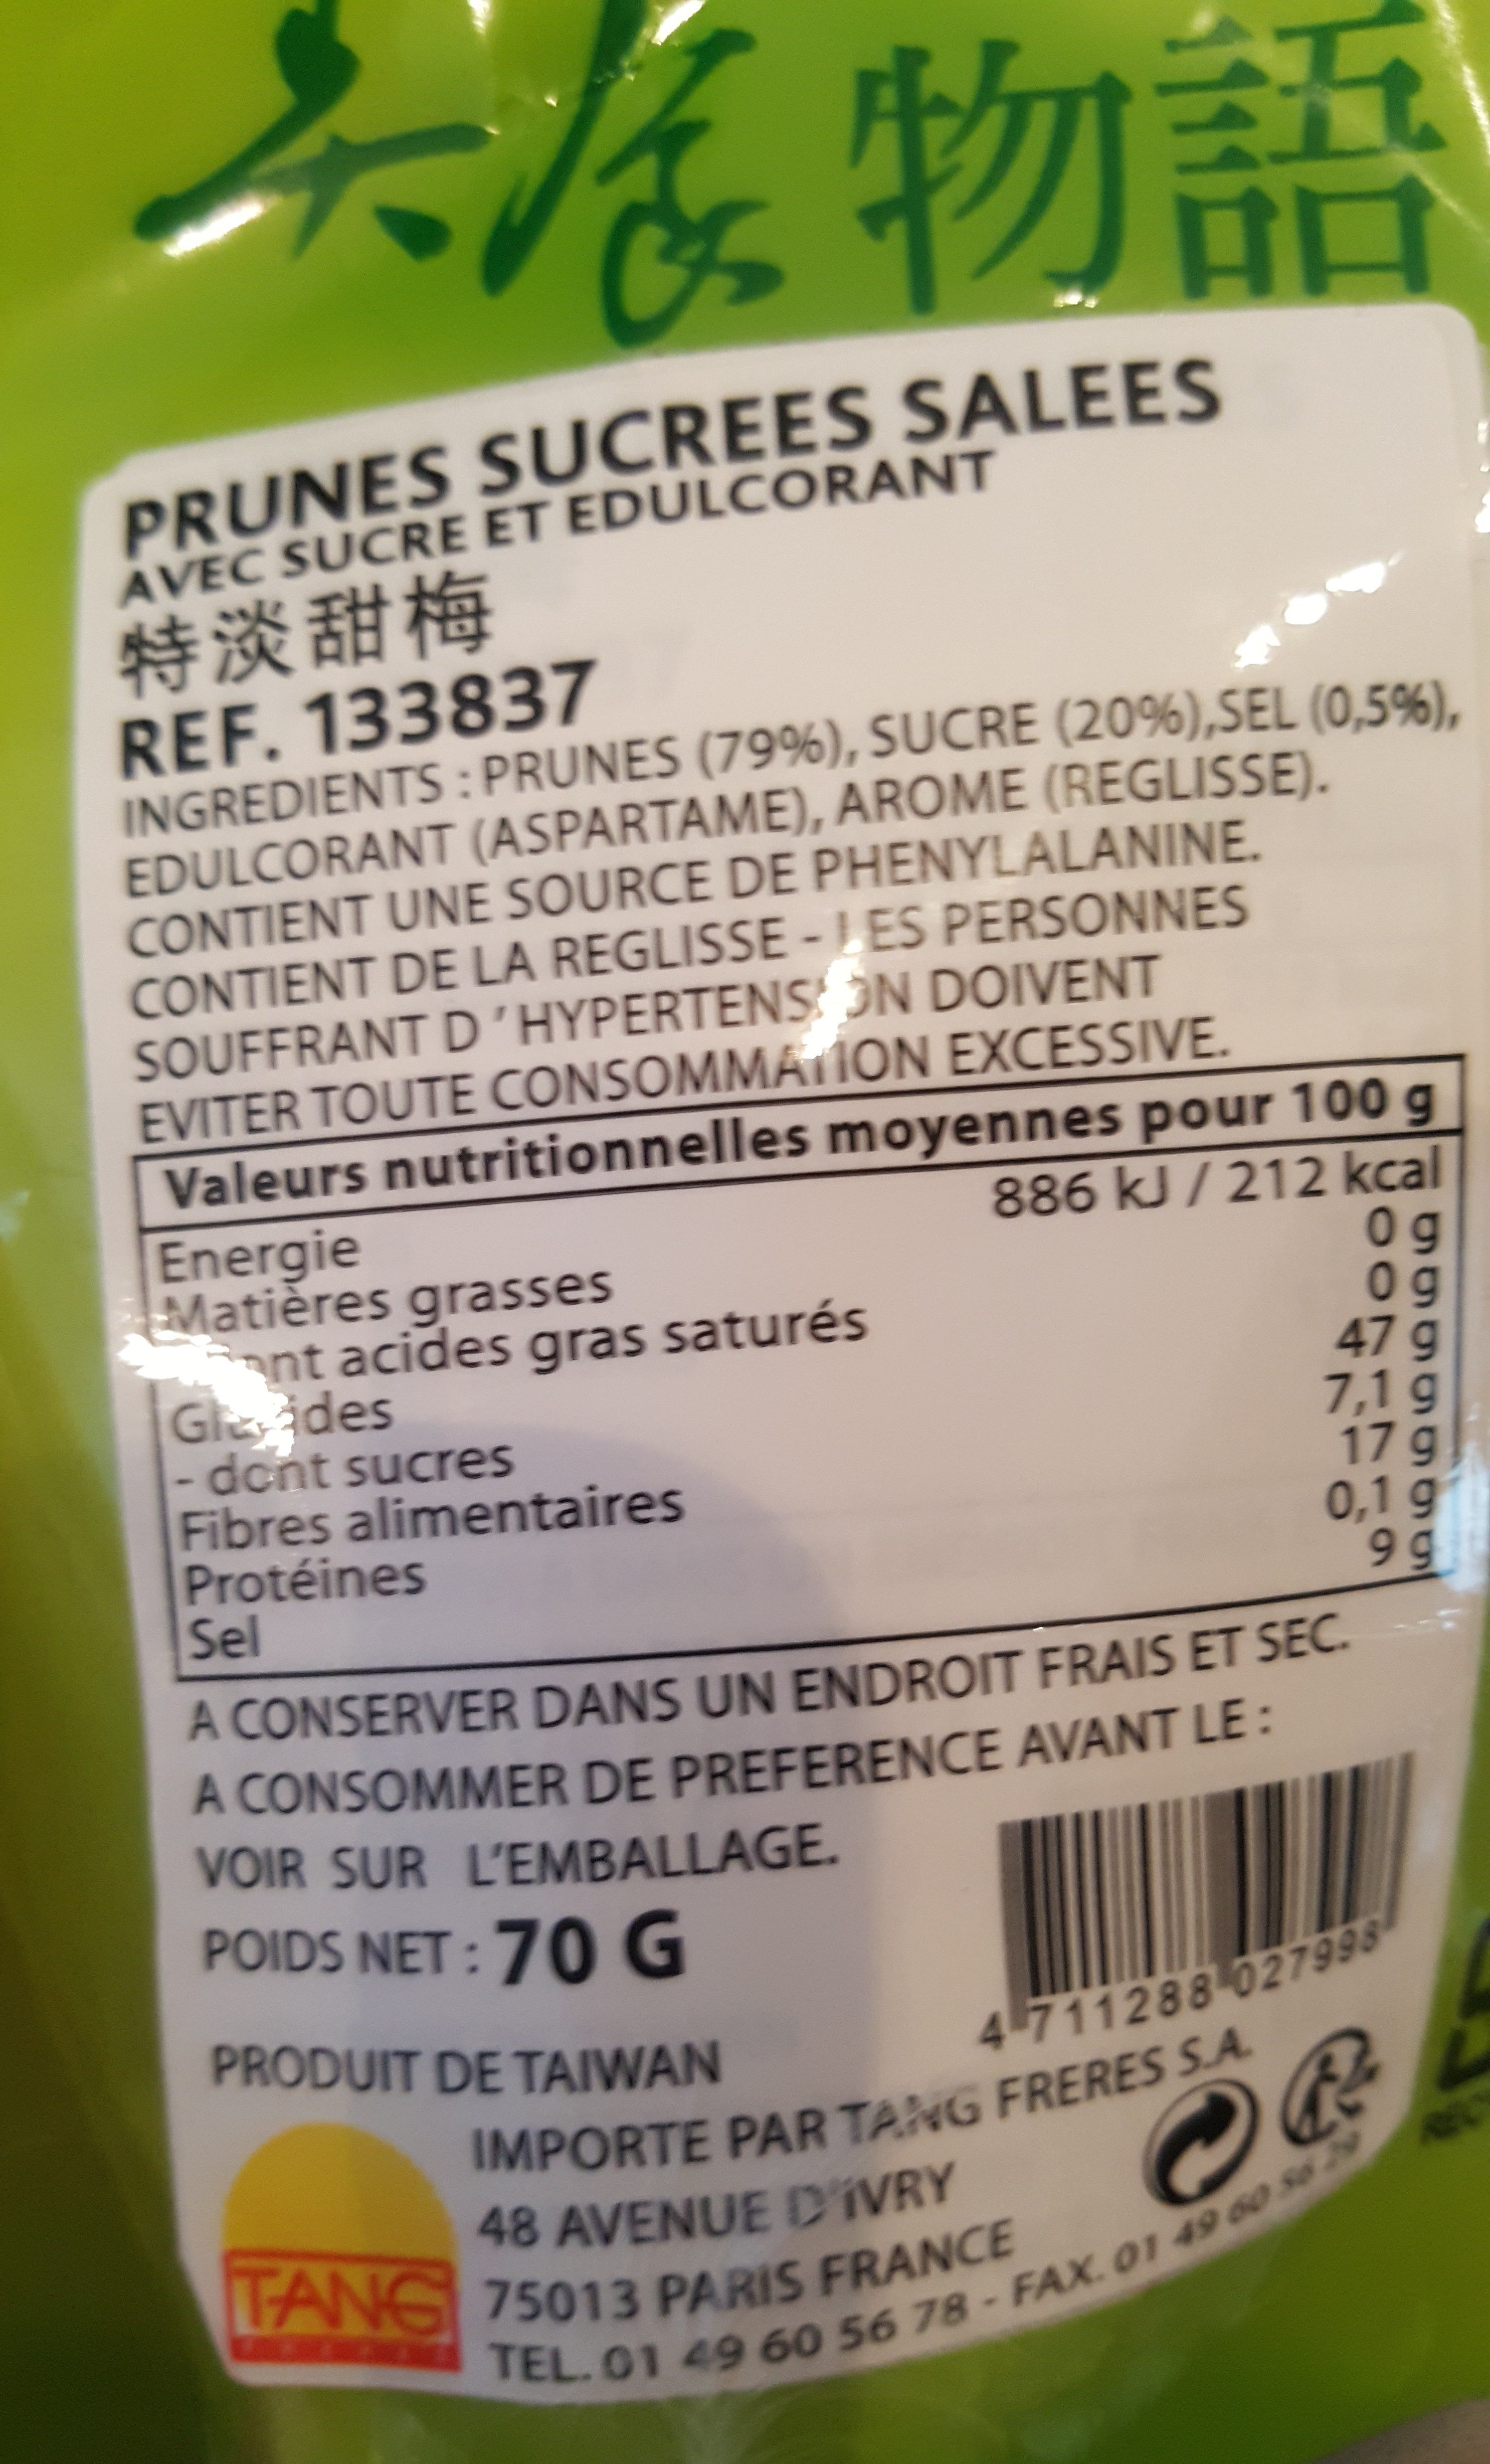 Prunes sucrées salées - Ingredients - fr